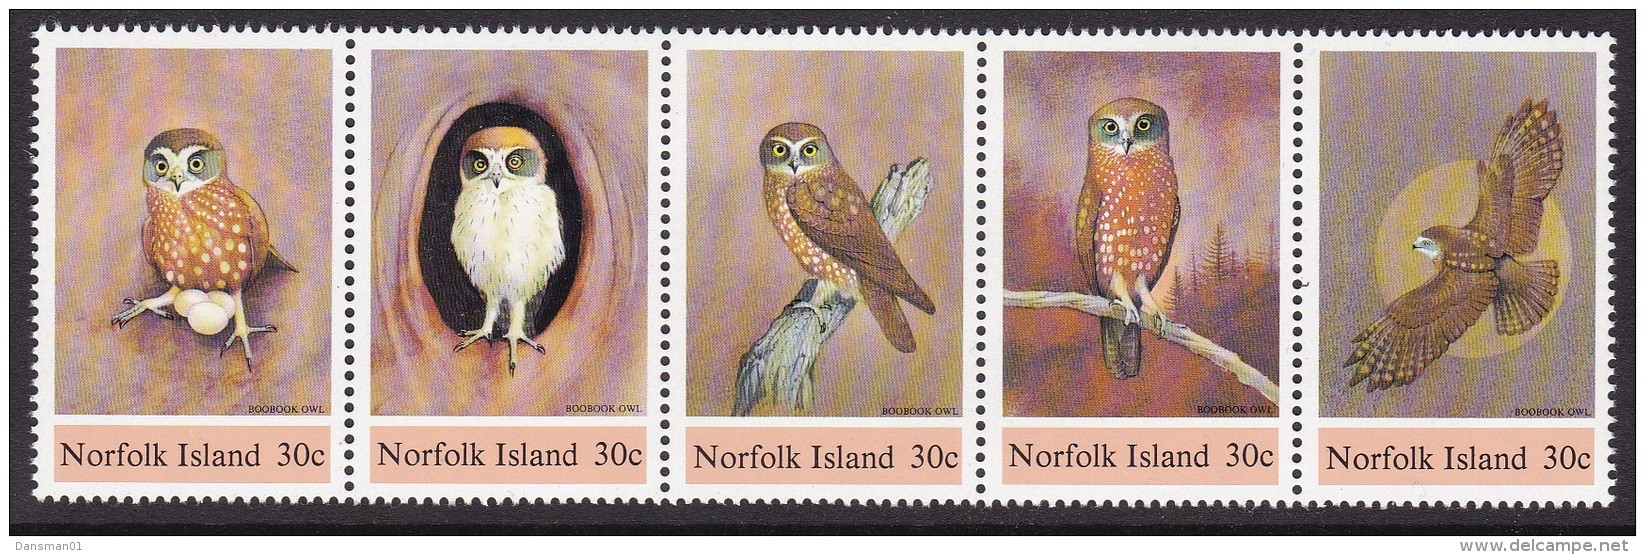 Norfolk Island 1984 Babook Owl Sc 343 Mint Never Hinged - Ile Norfolk